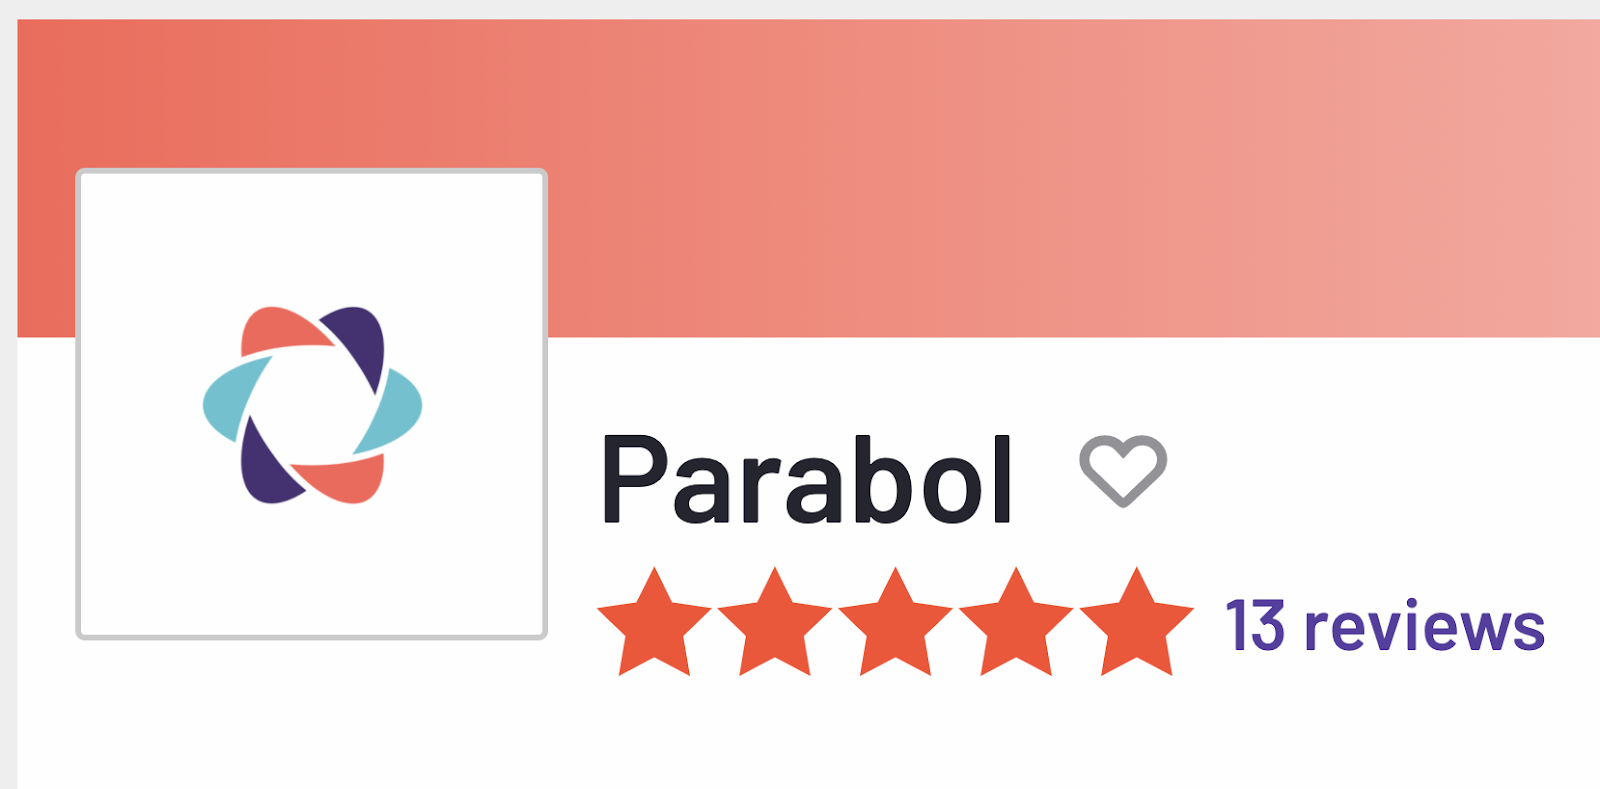 Parabol 5 star reviews on G2 crowd